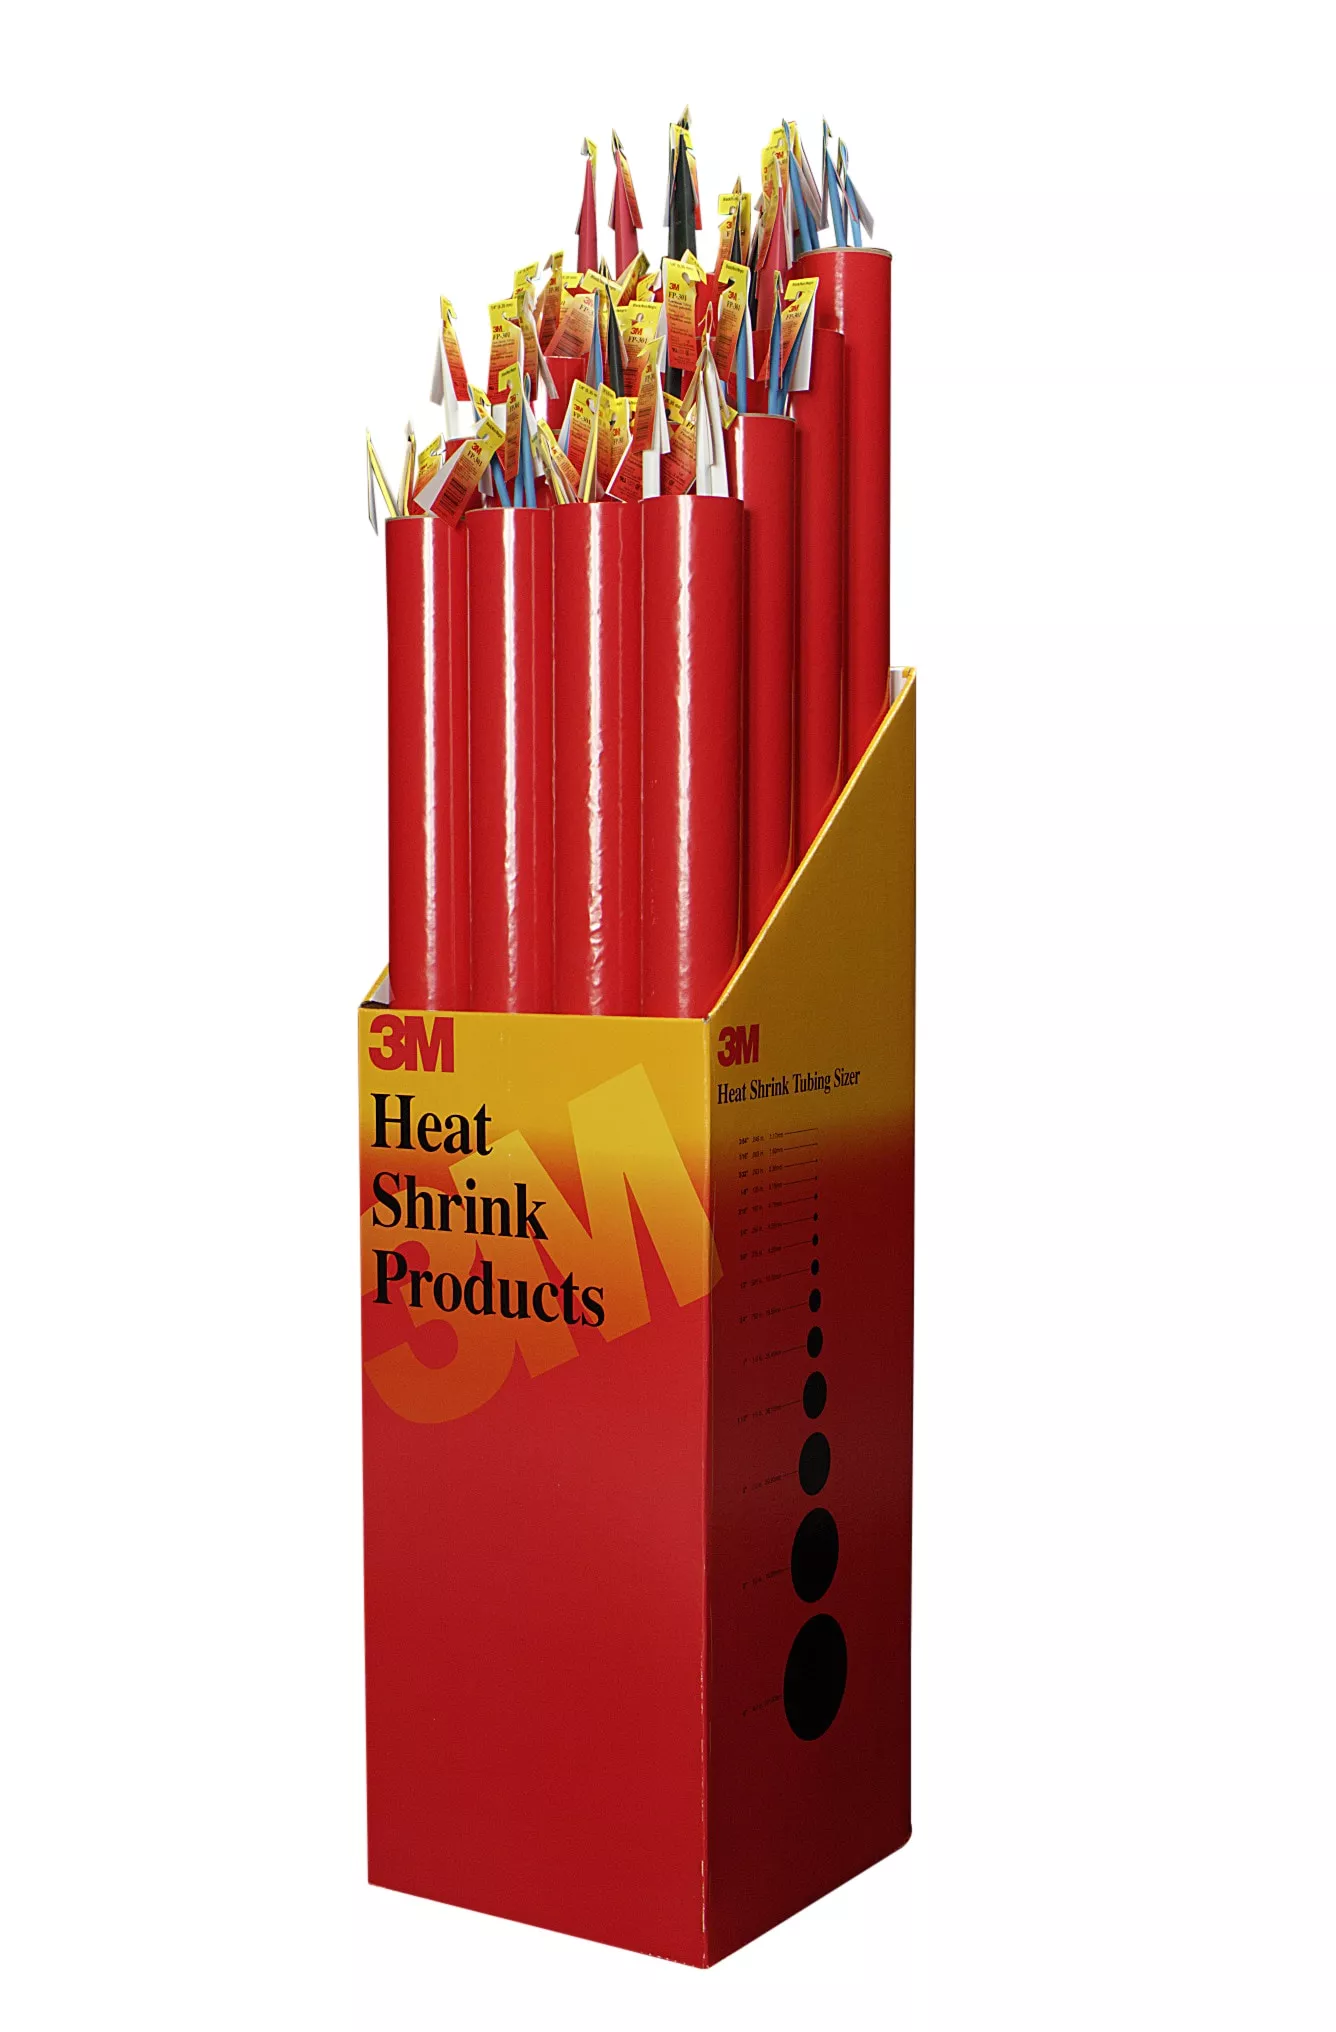 SKU 7000133591 | 3M™ Modified Polyvinylidene Flouride Heat Shrink Tubing
MFP-1/8-48-Clear-Box: 4 ft length sticks